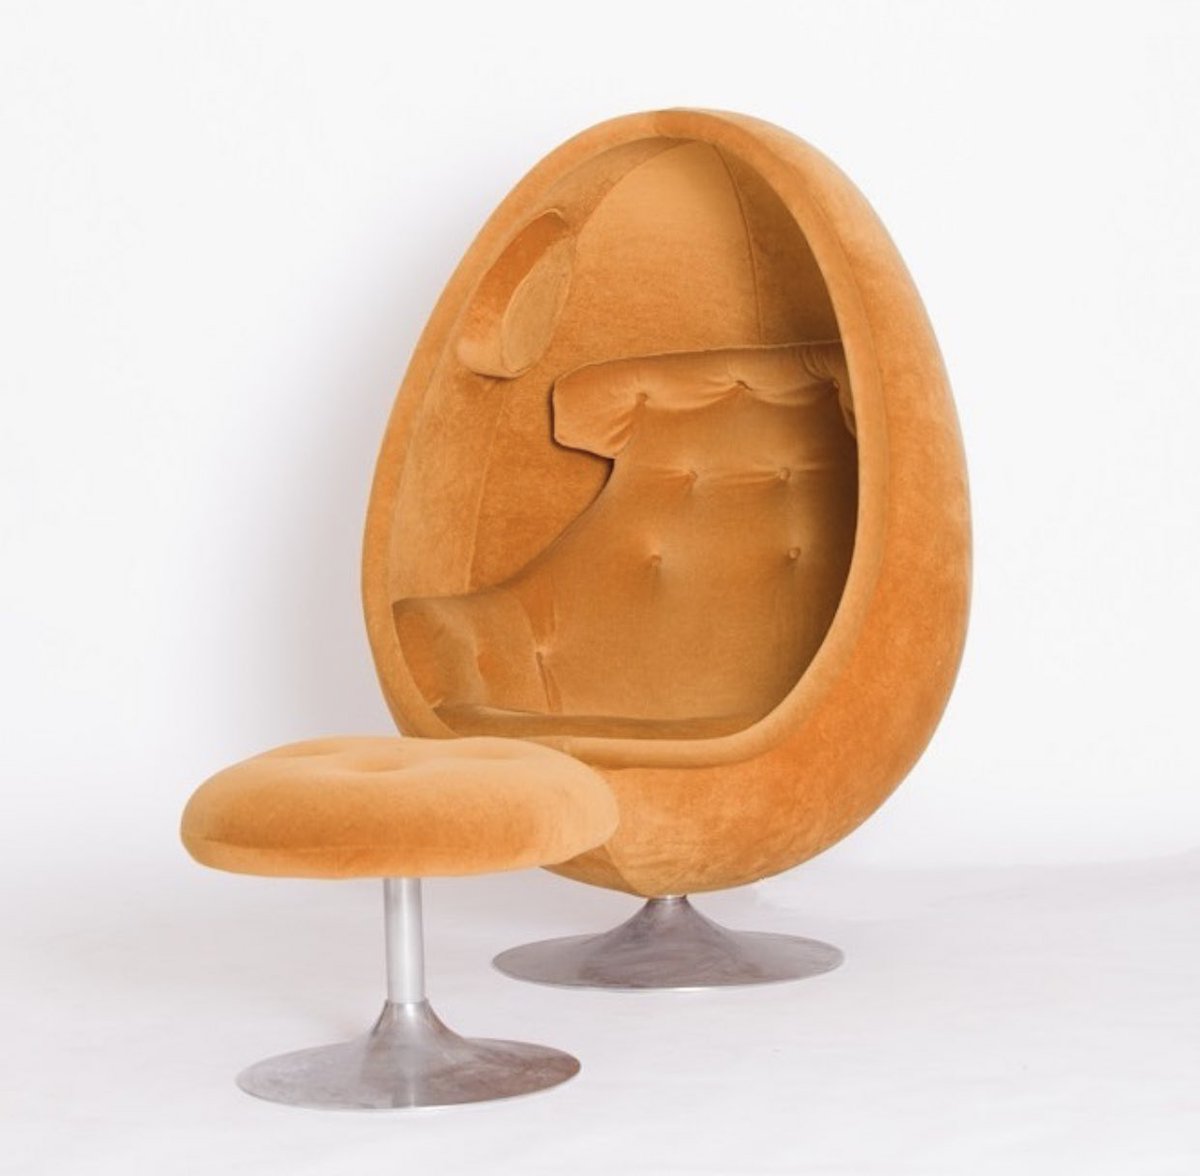 RT @StreetFashion01: Ovalia Egg Chair designed by Henrik Thor-Larsen (1968) https://t.co/zF1SHfRiFh